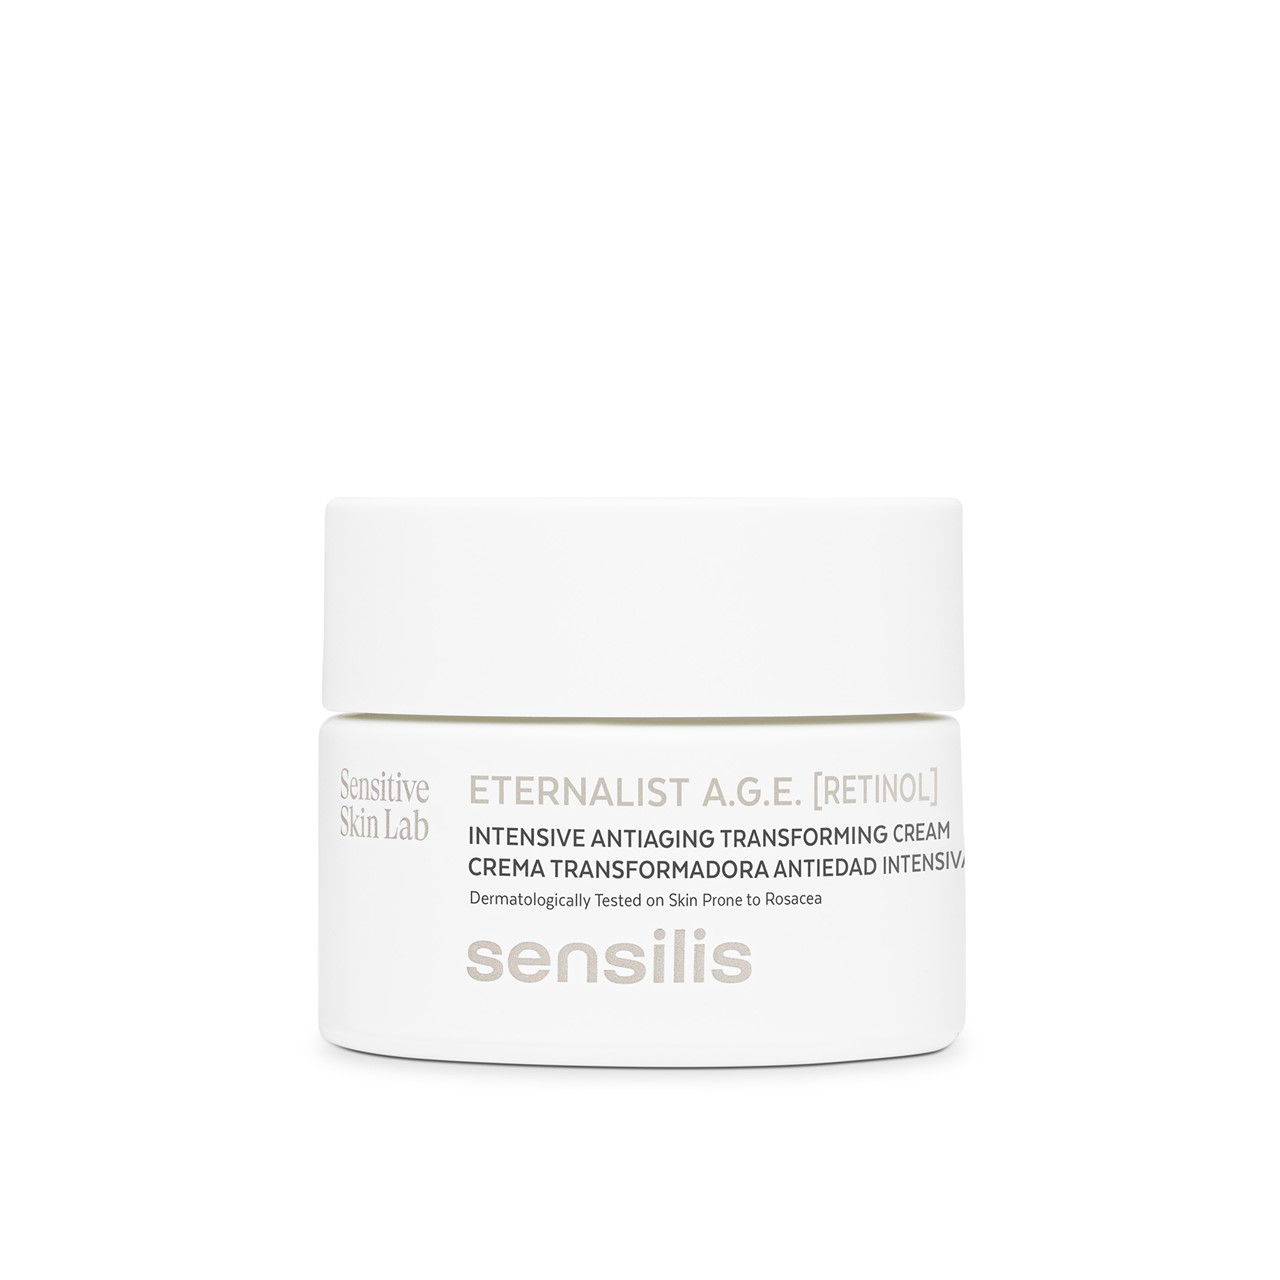 Sensilis Eternalist A.G.E. [Retinol] Intensive Antiaging Cream 50ml (1.69fl oz)